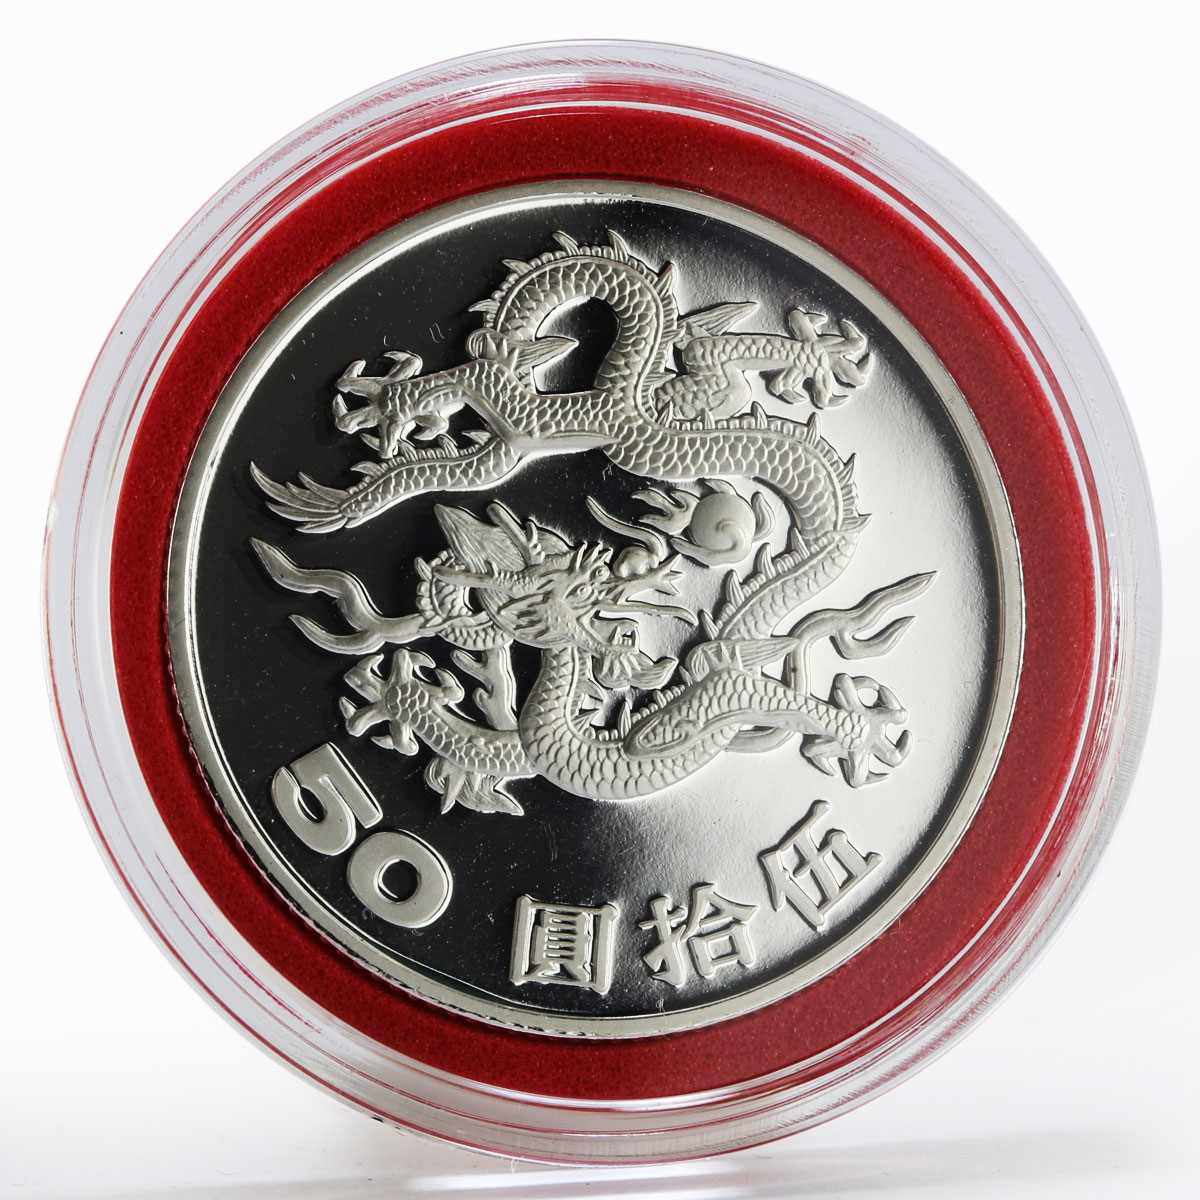 China 50 yuan Taiwan Year of the Dragon proof silver coin 2000